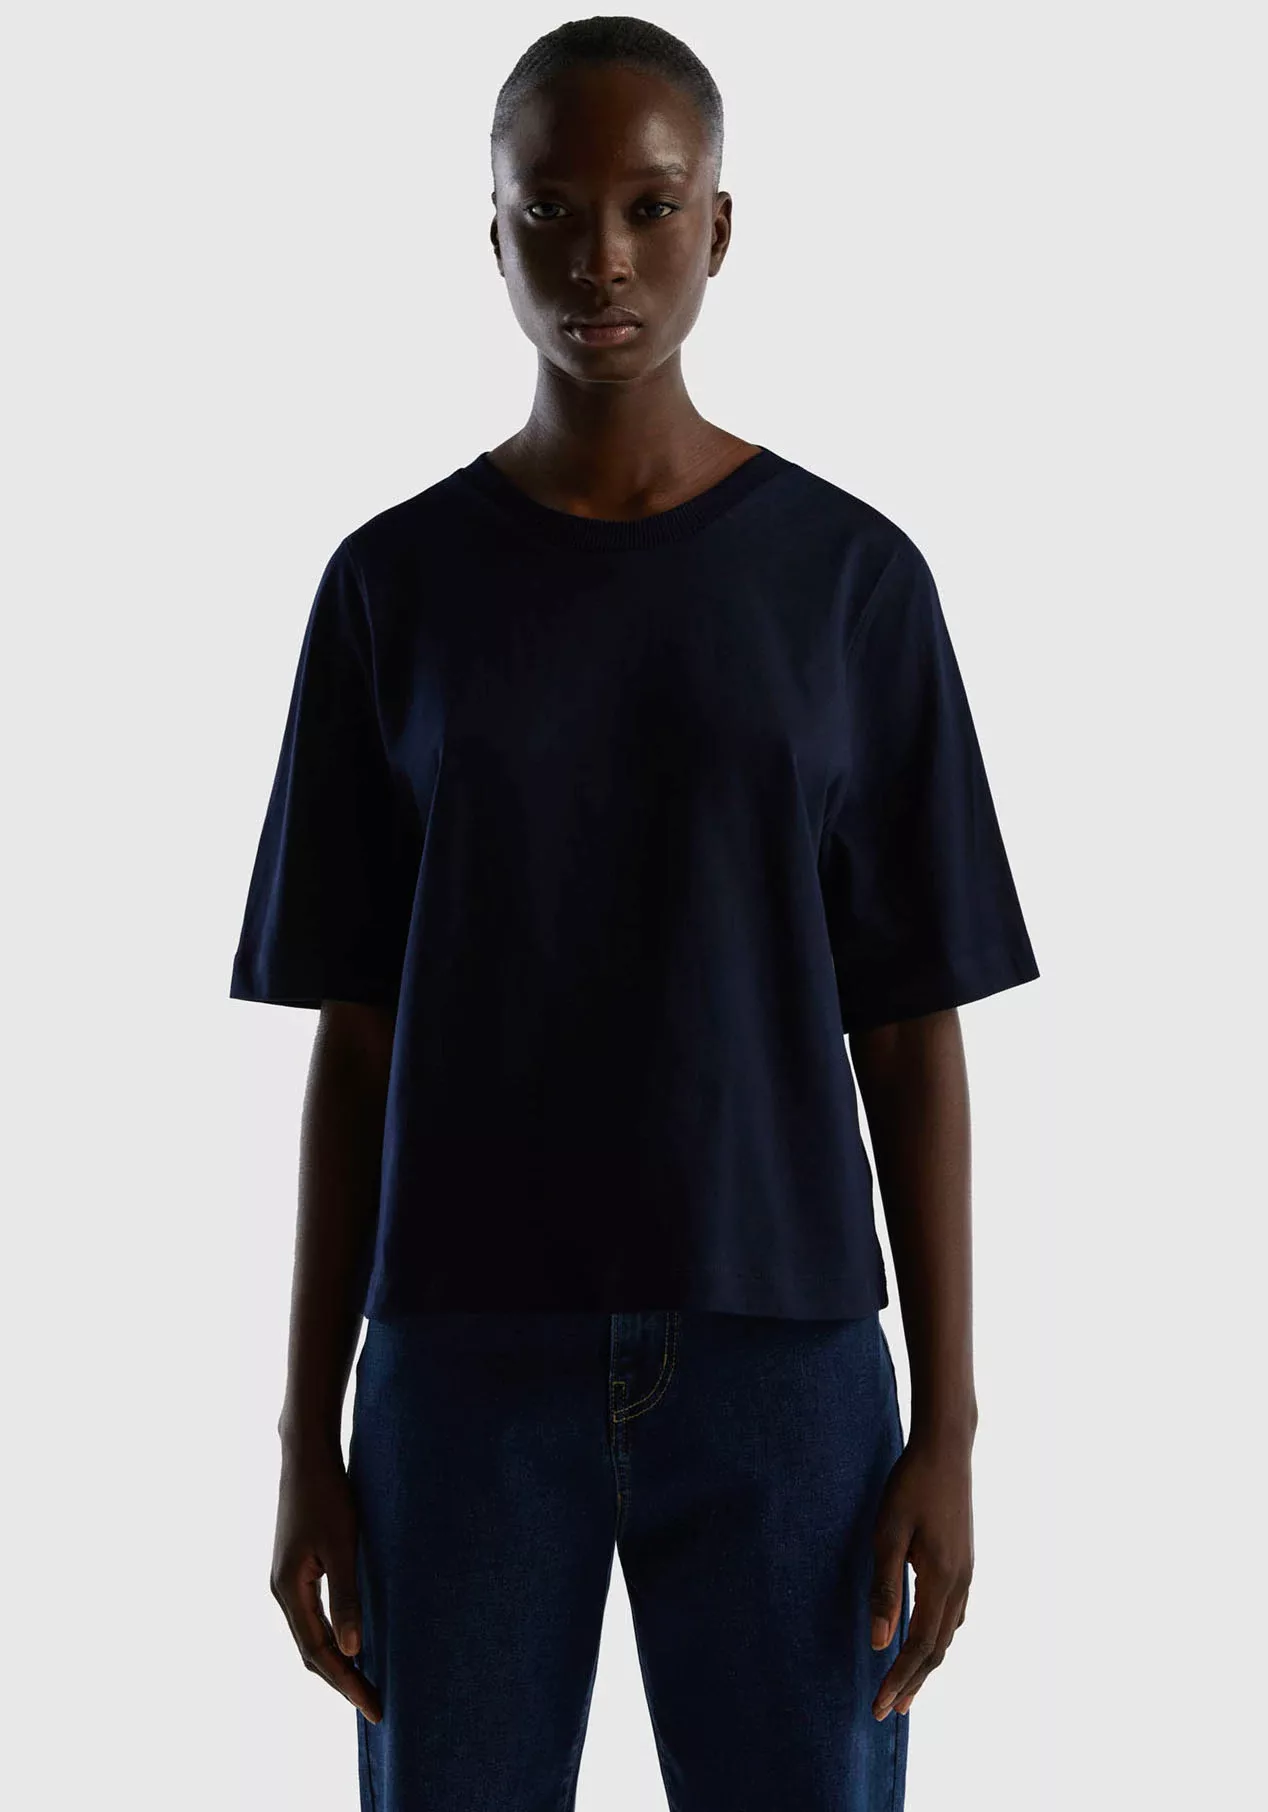 United Colors of Benetton T-Shirt im Basic Look günstig online kaufen